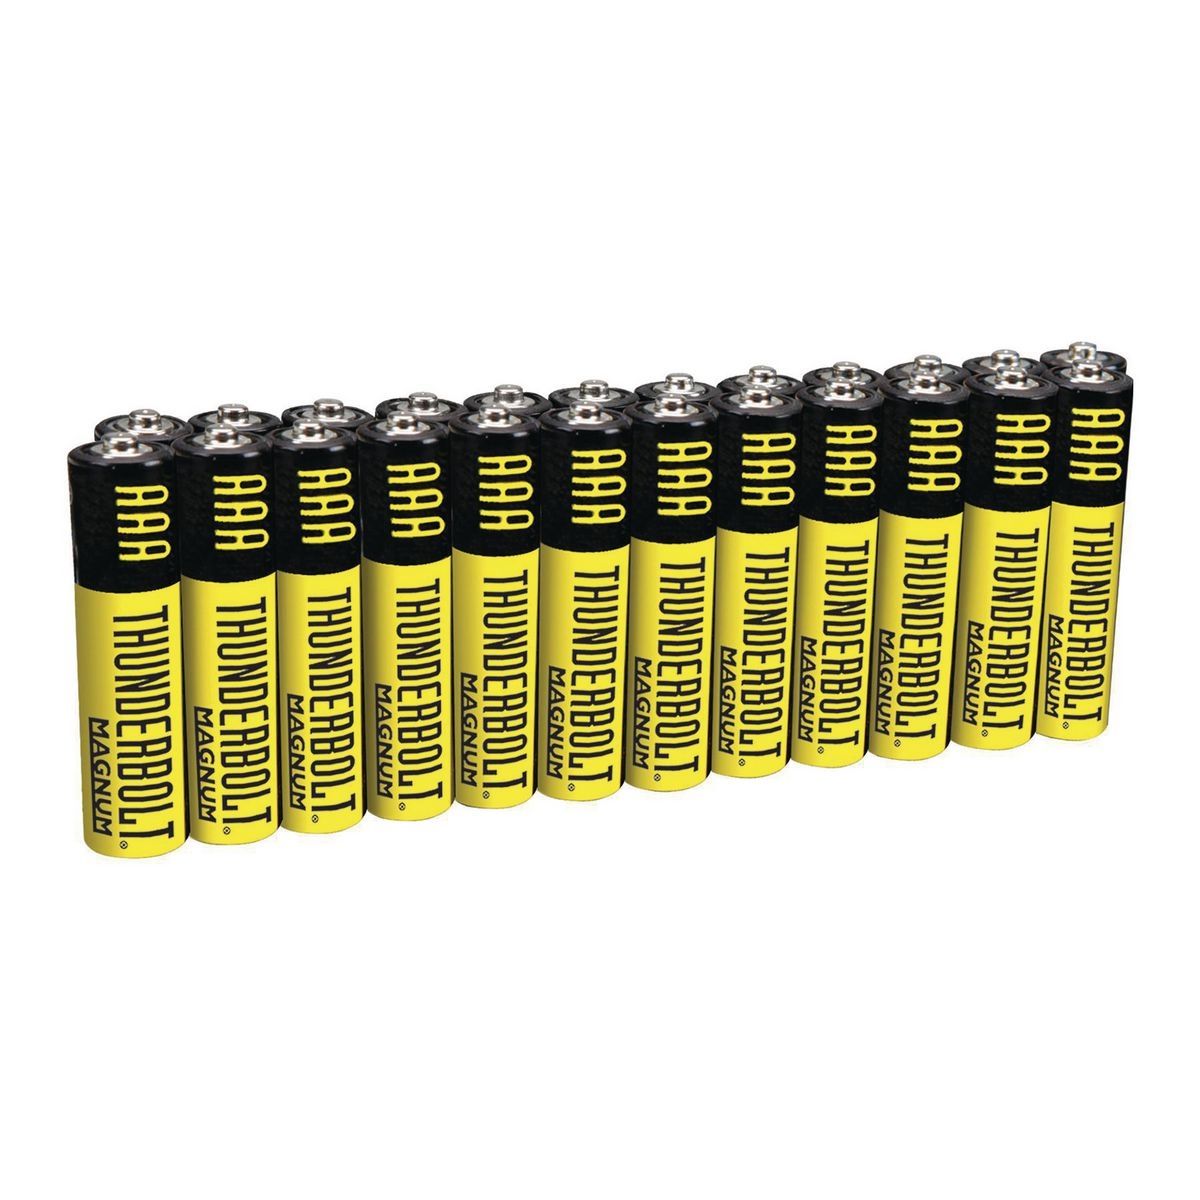 THUNDERBOLT MAGNUM AAA Zinc Chloride Batteries, 24 Pack